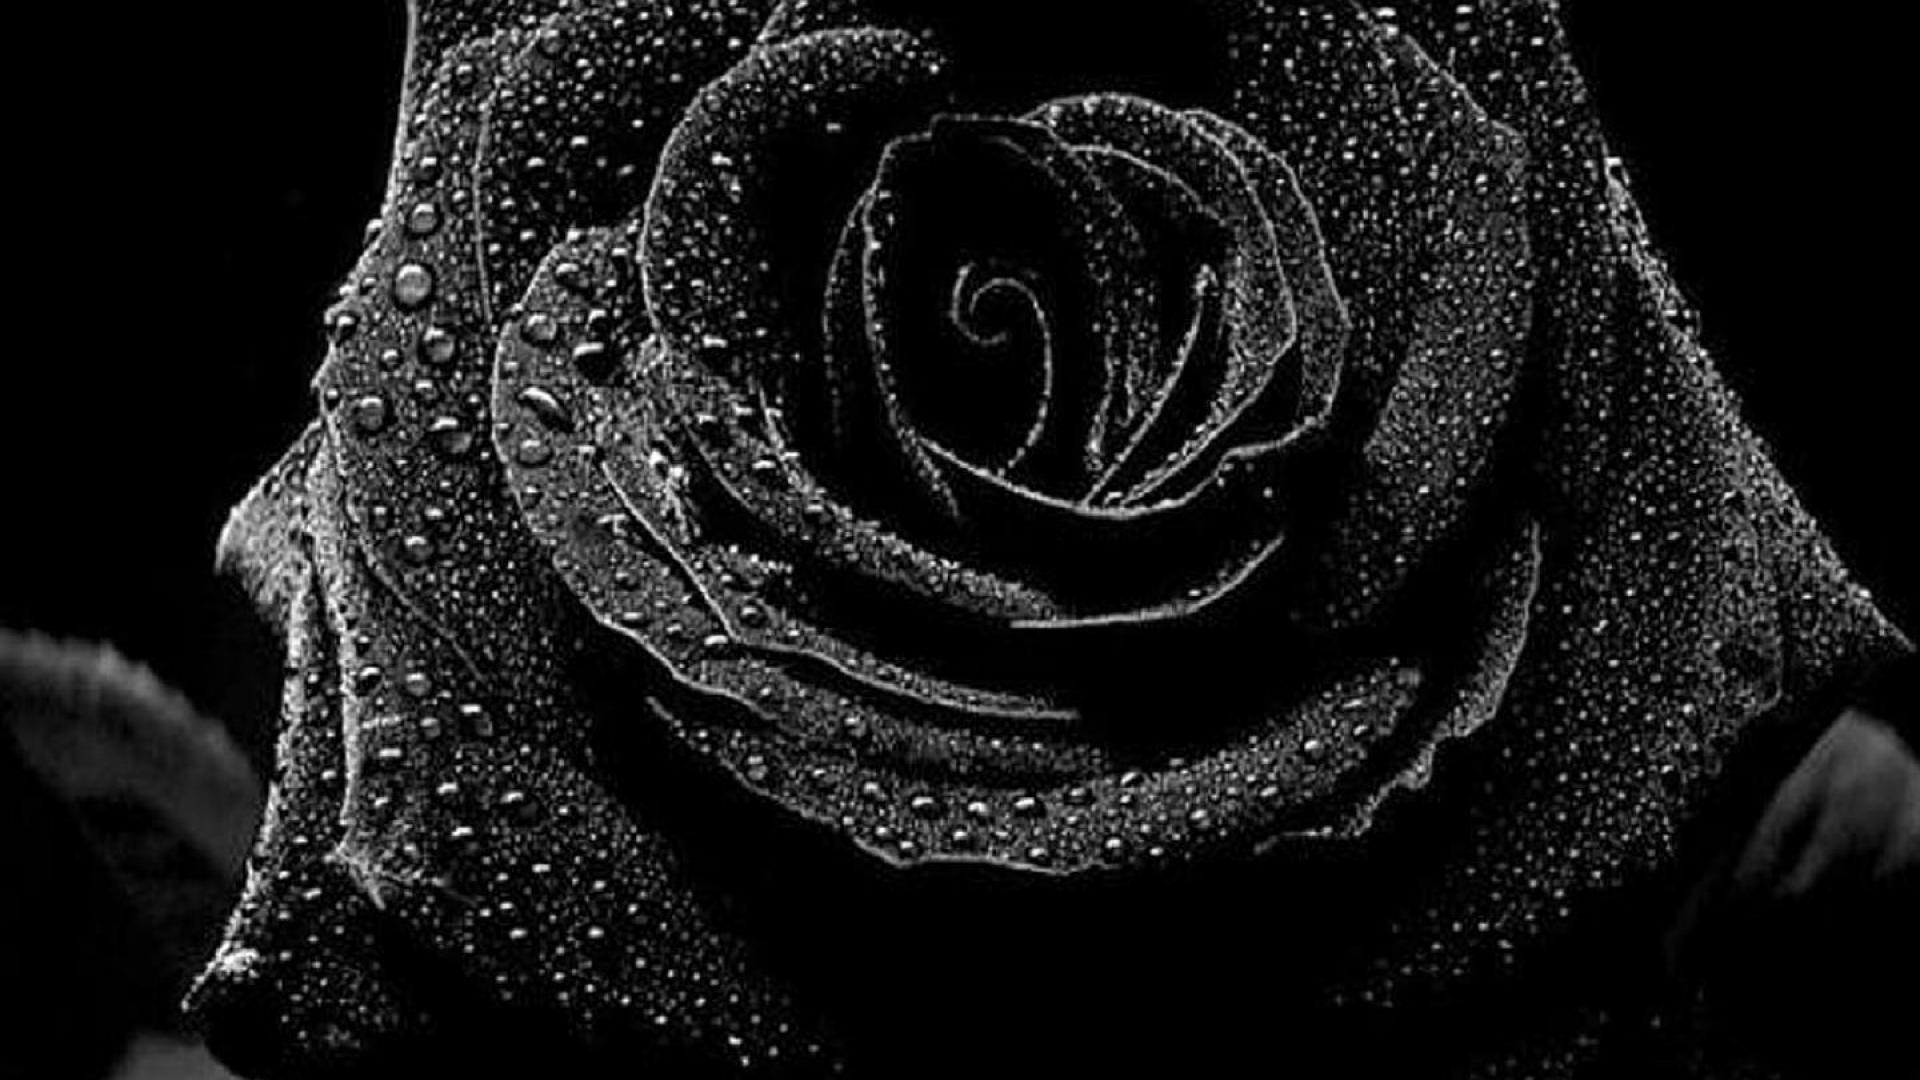 Hoa hồng đen tuyệt đẹp